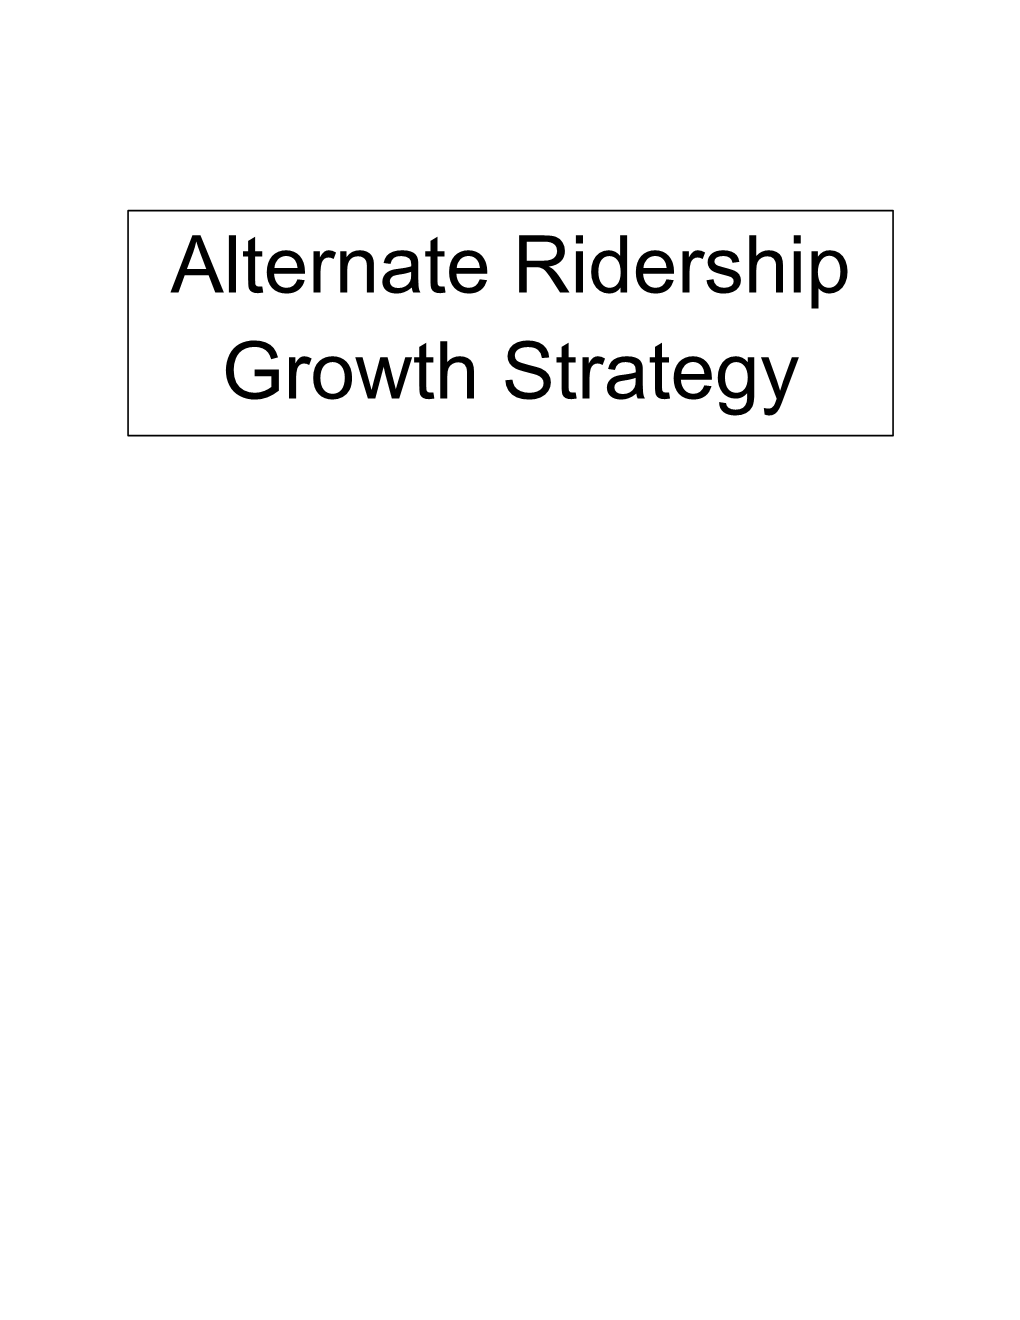 Alternate Ridership Growth Strategy